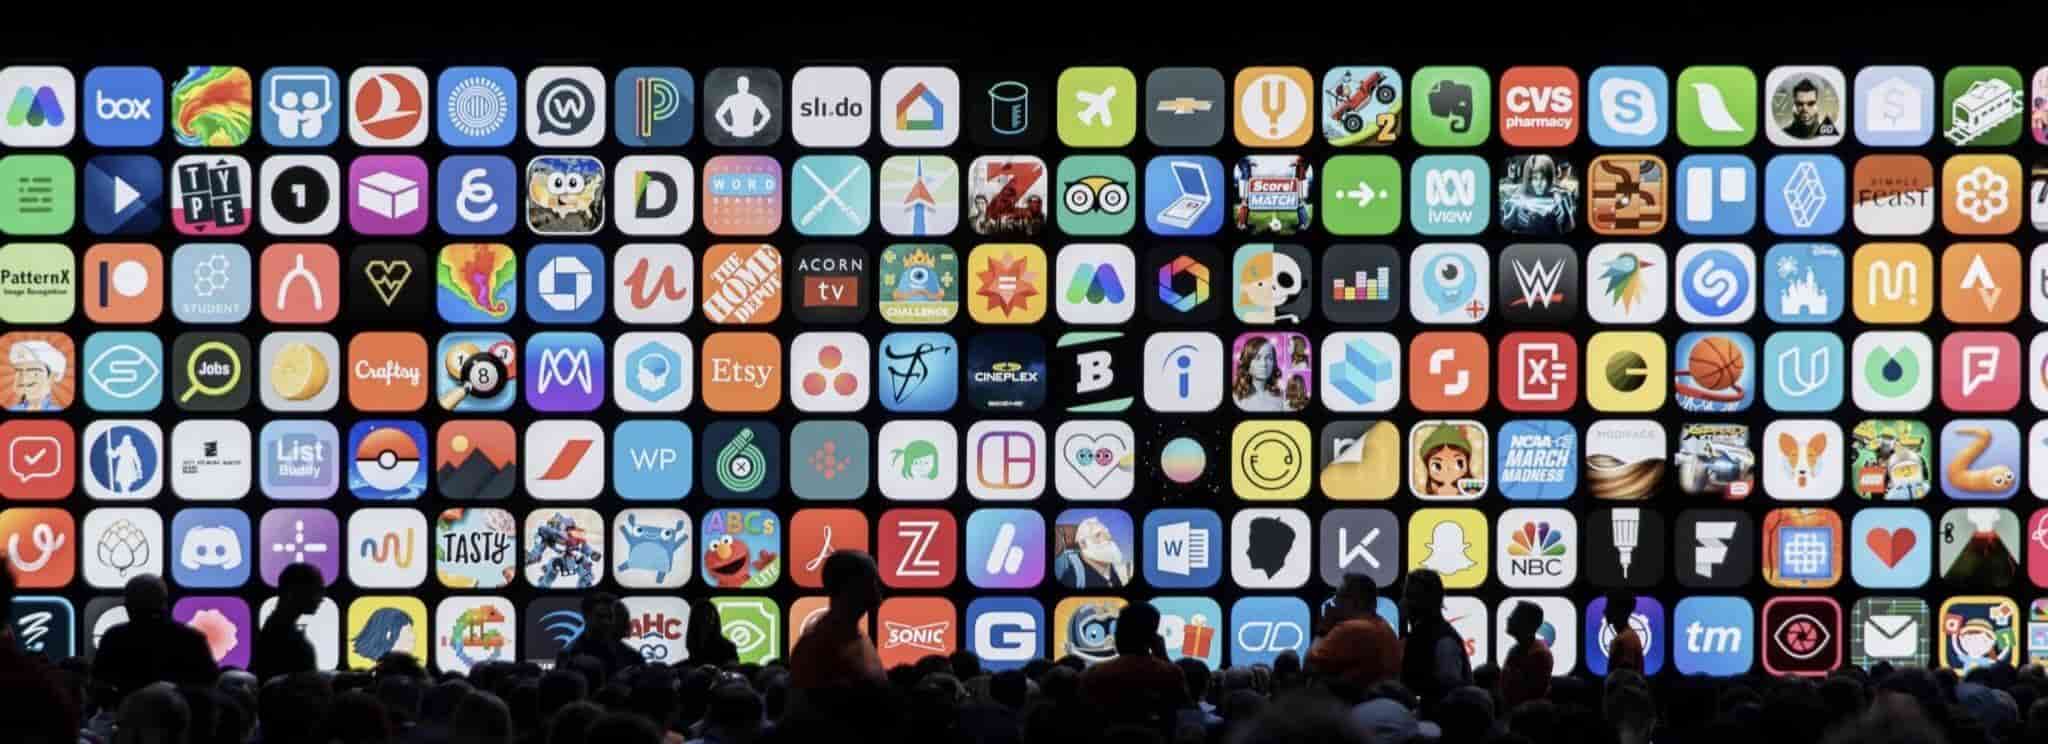 iOS app store icons